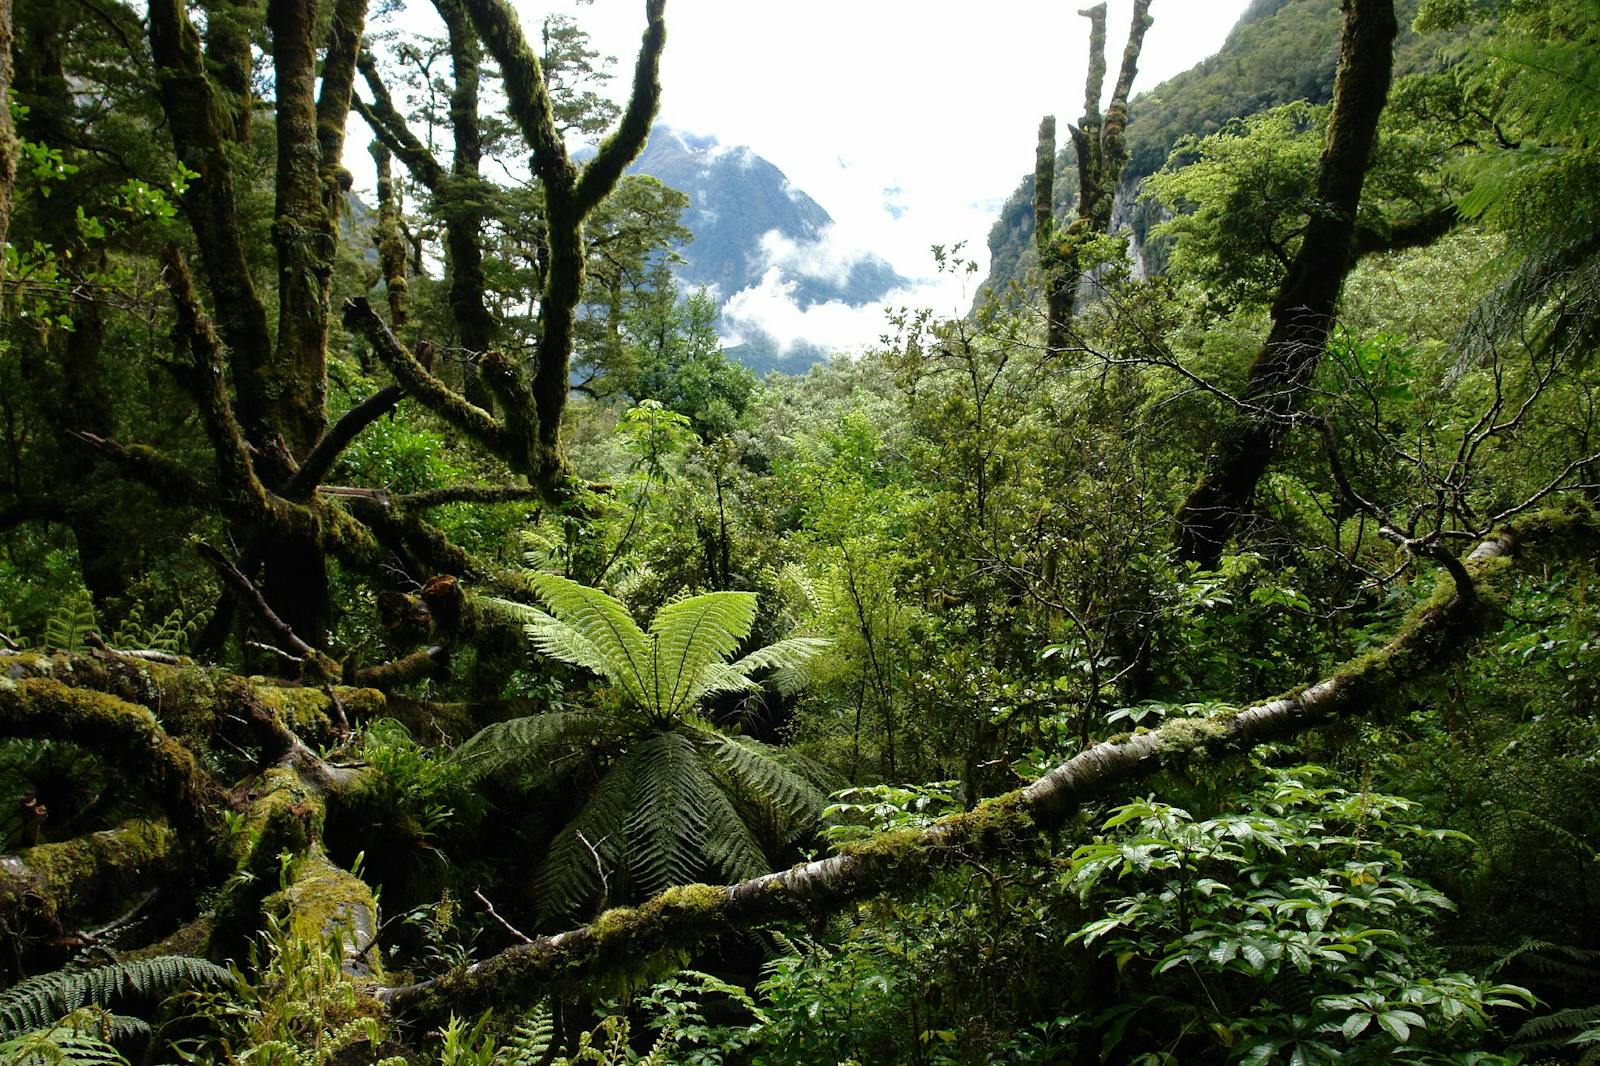 Rainforest - Wikipedia